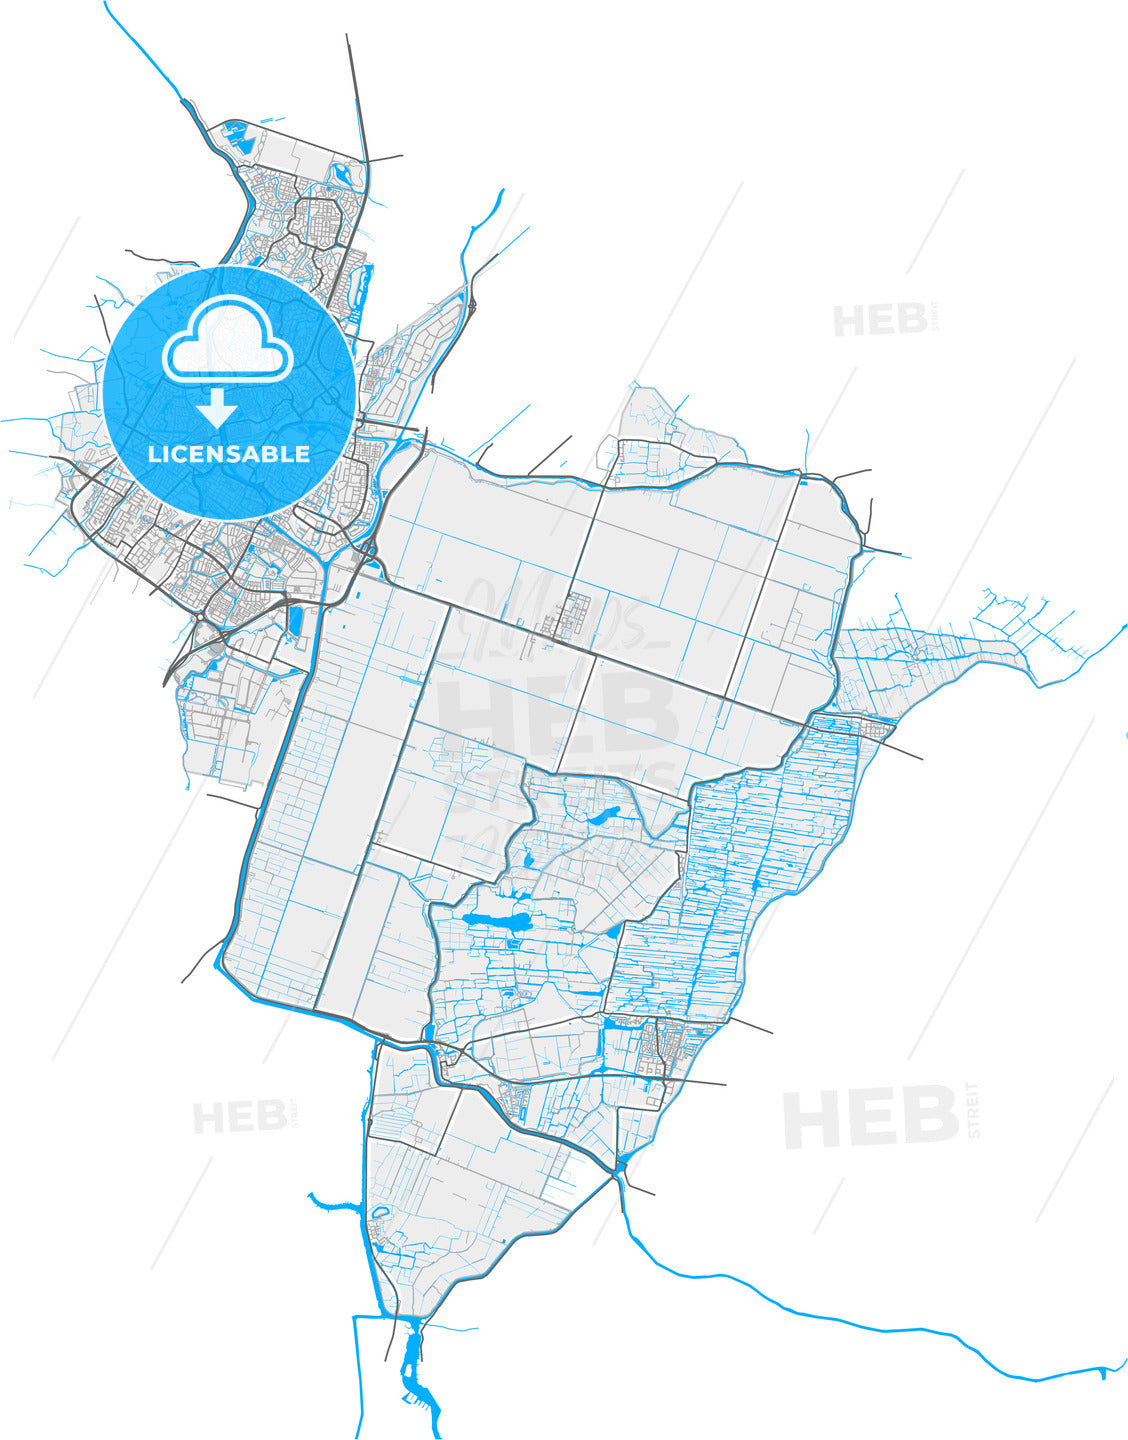 Alkmaar, North Holland, Netherlands, high quality vector map